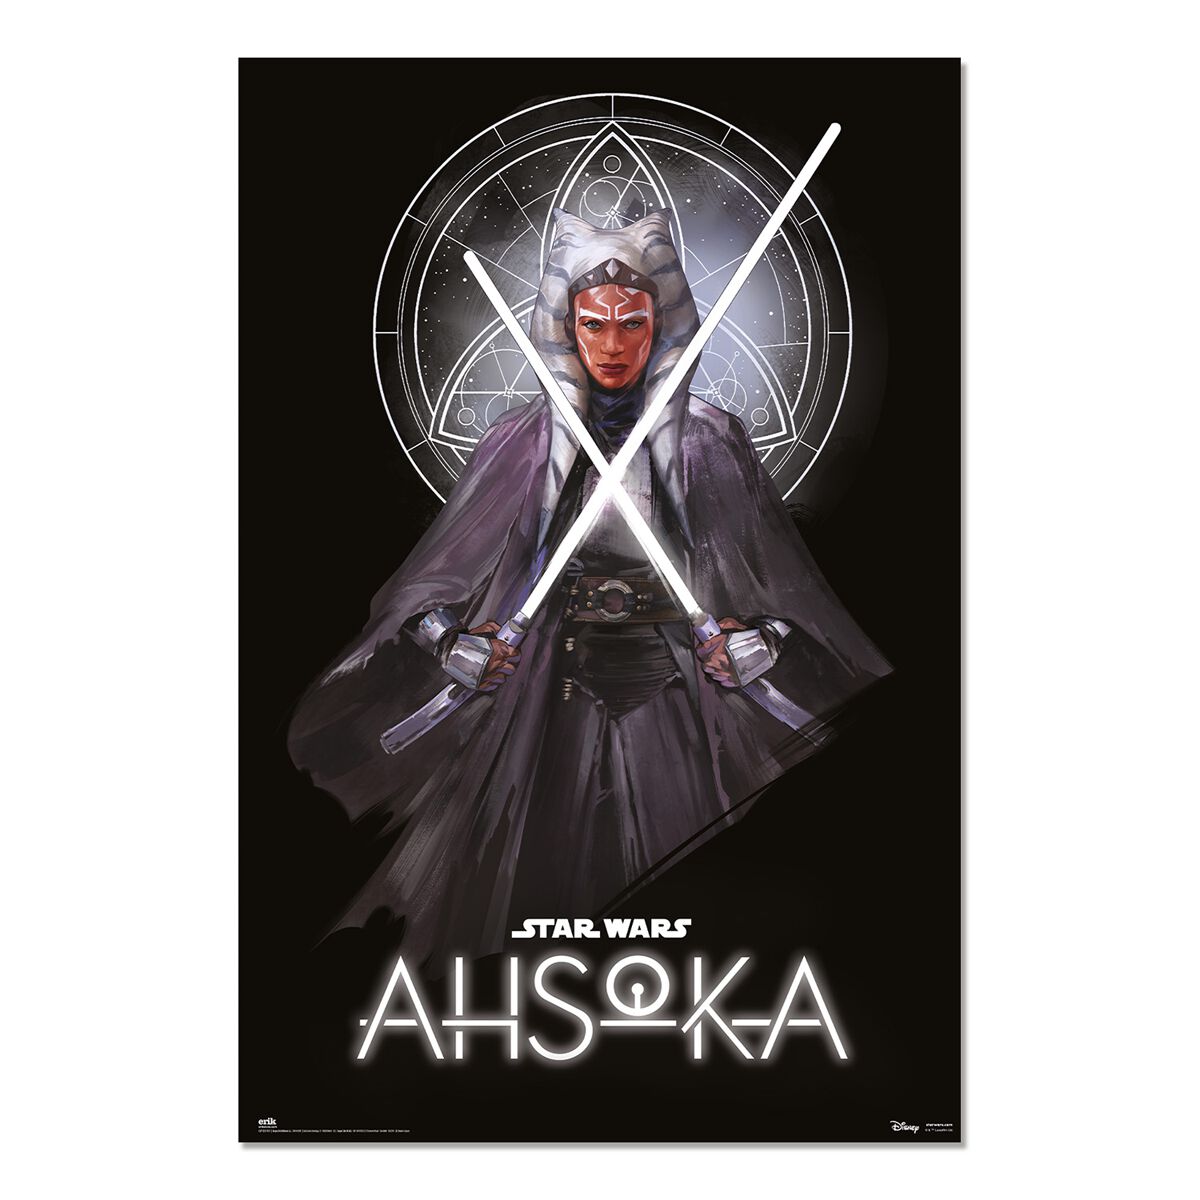 Star Wars - Ahsoka - Ahsoka Tano Lightsabers - Poster - multicolor